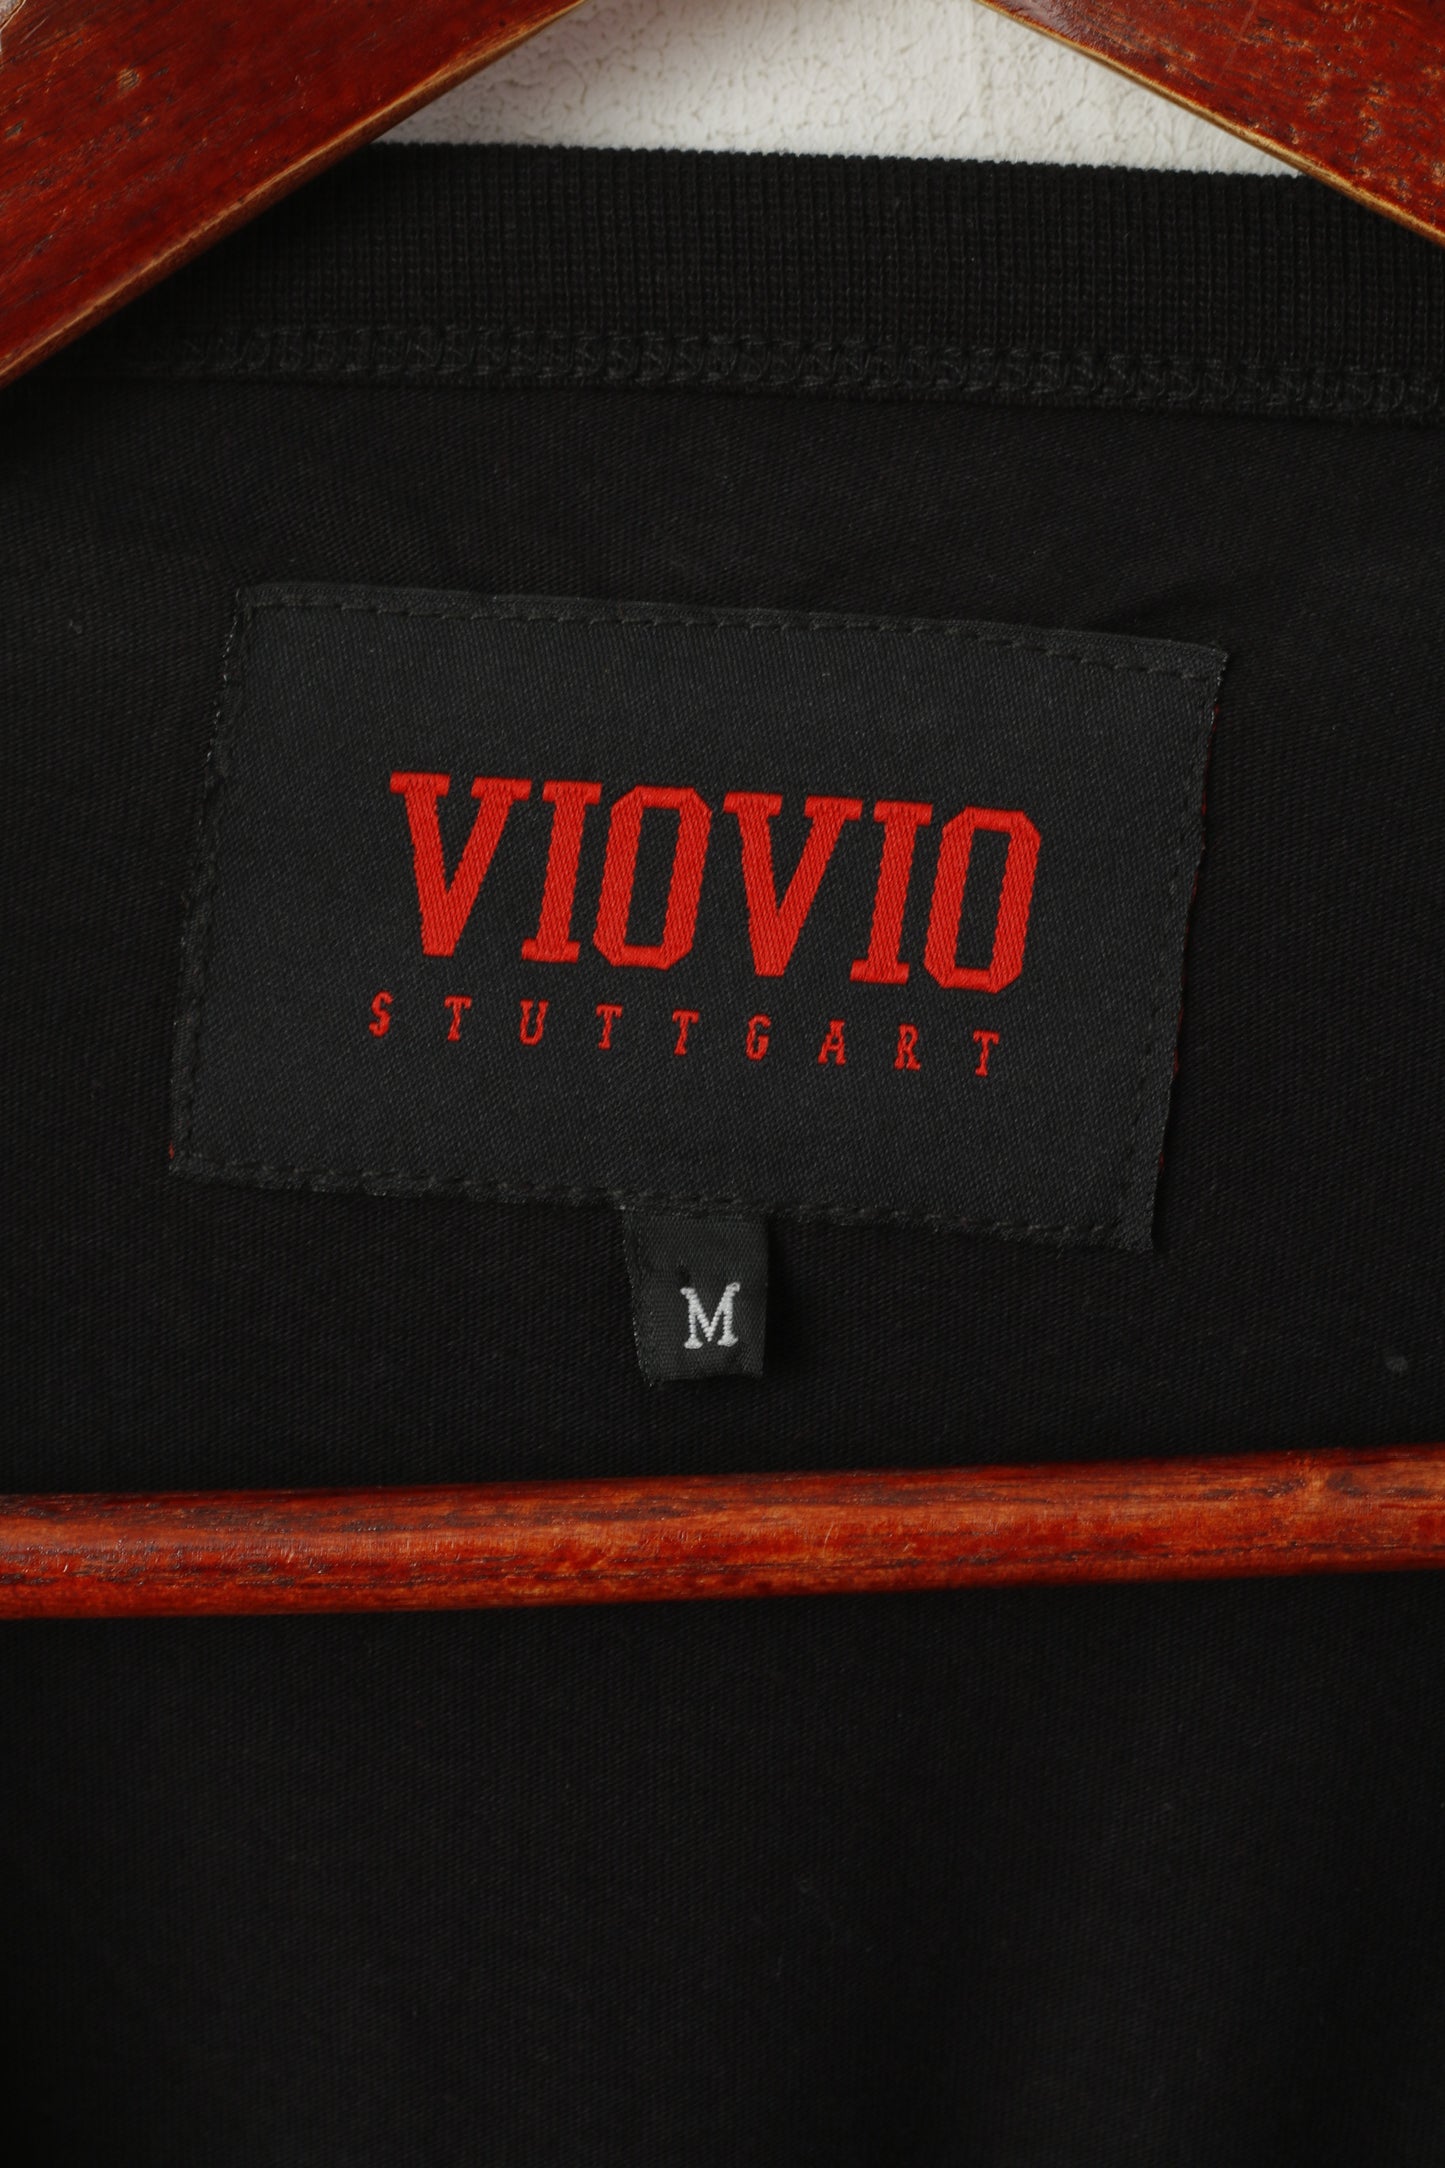 VioVio Stuttgart Women M Sweatshirt Black Cotton Cropped Oversize Top